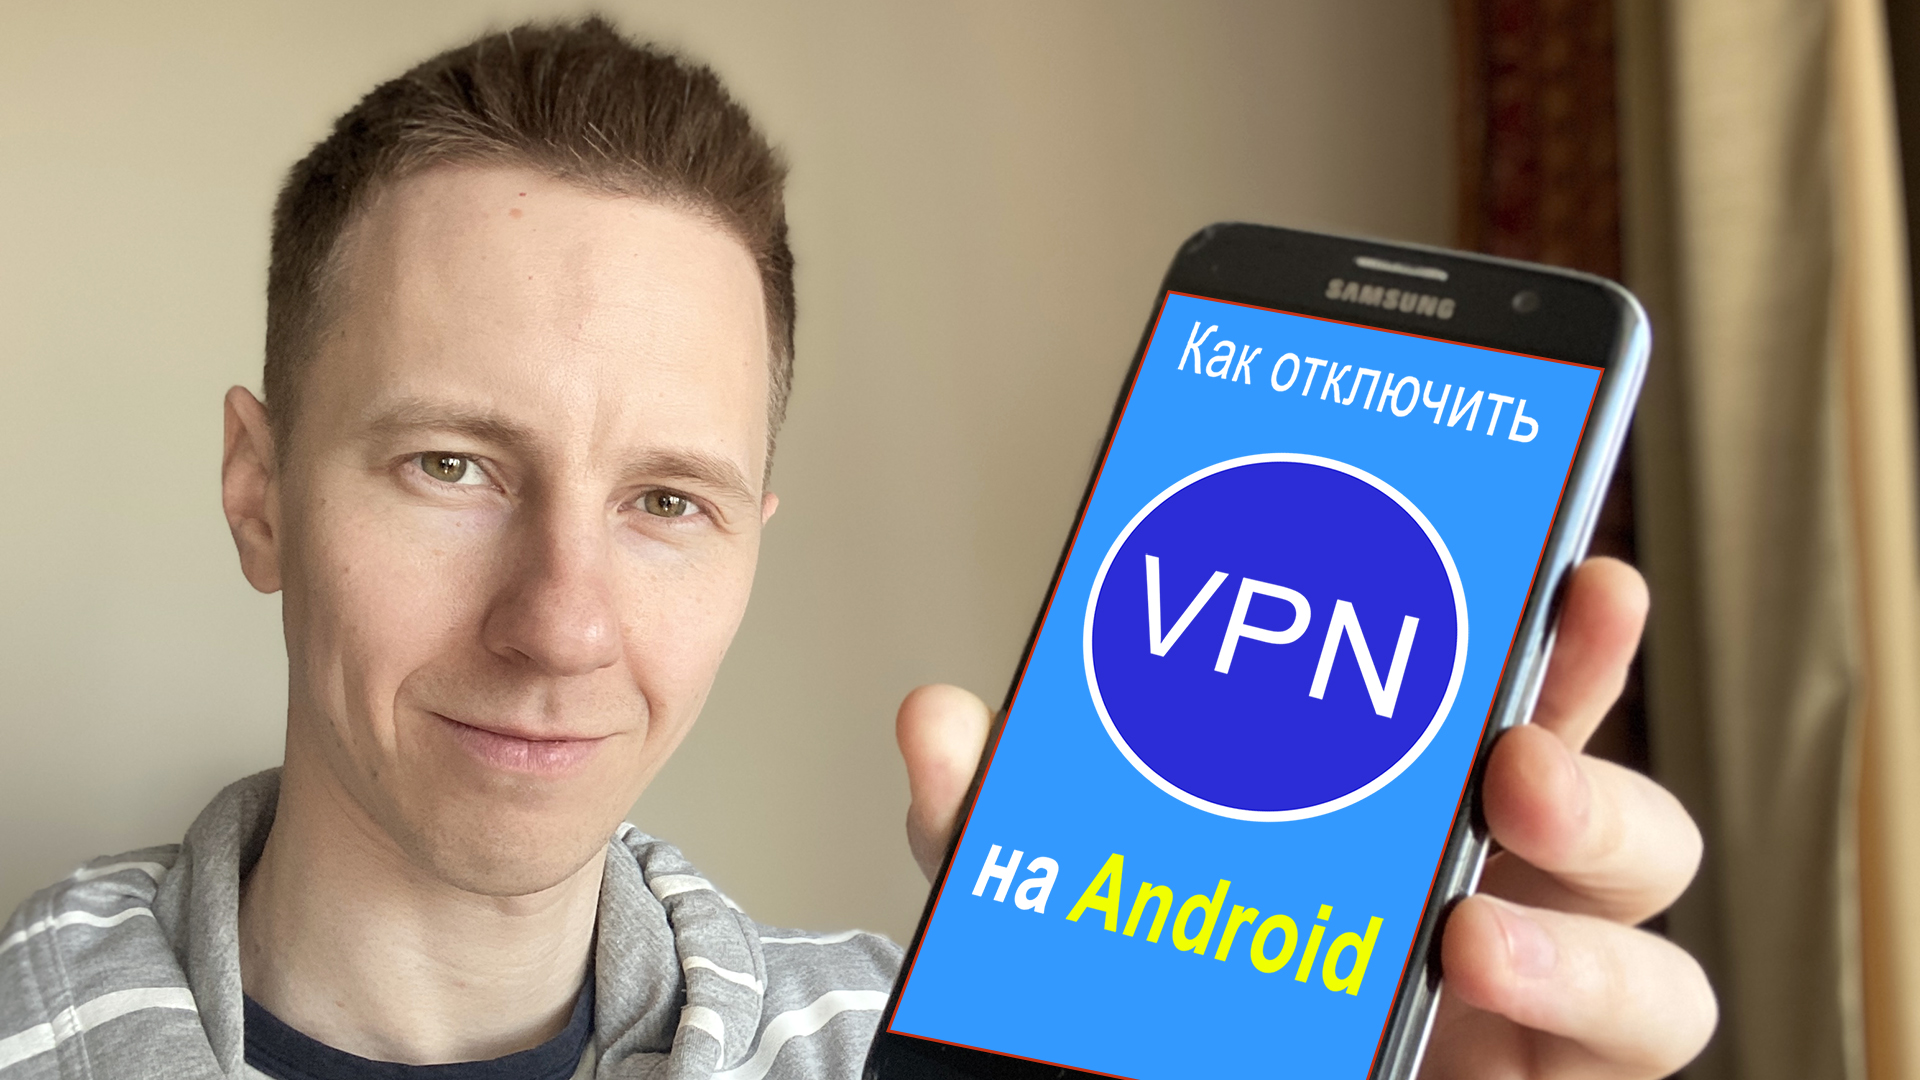 Владимир Белев с телефоном Samsung на платформе Андроид в руках. На экране смартфона текст VPN, как отключить на Android.